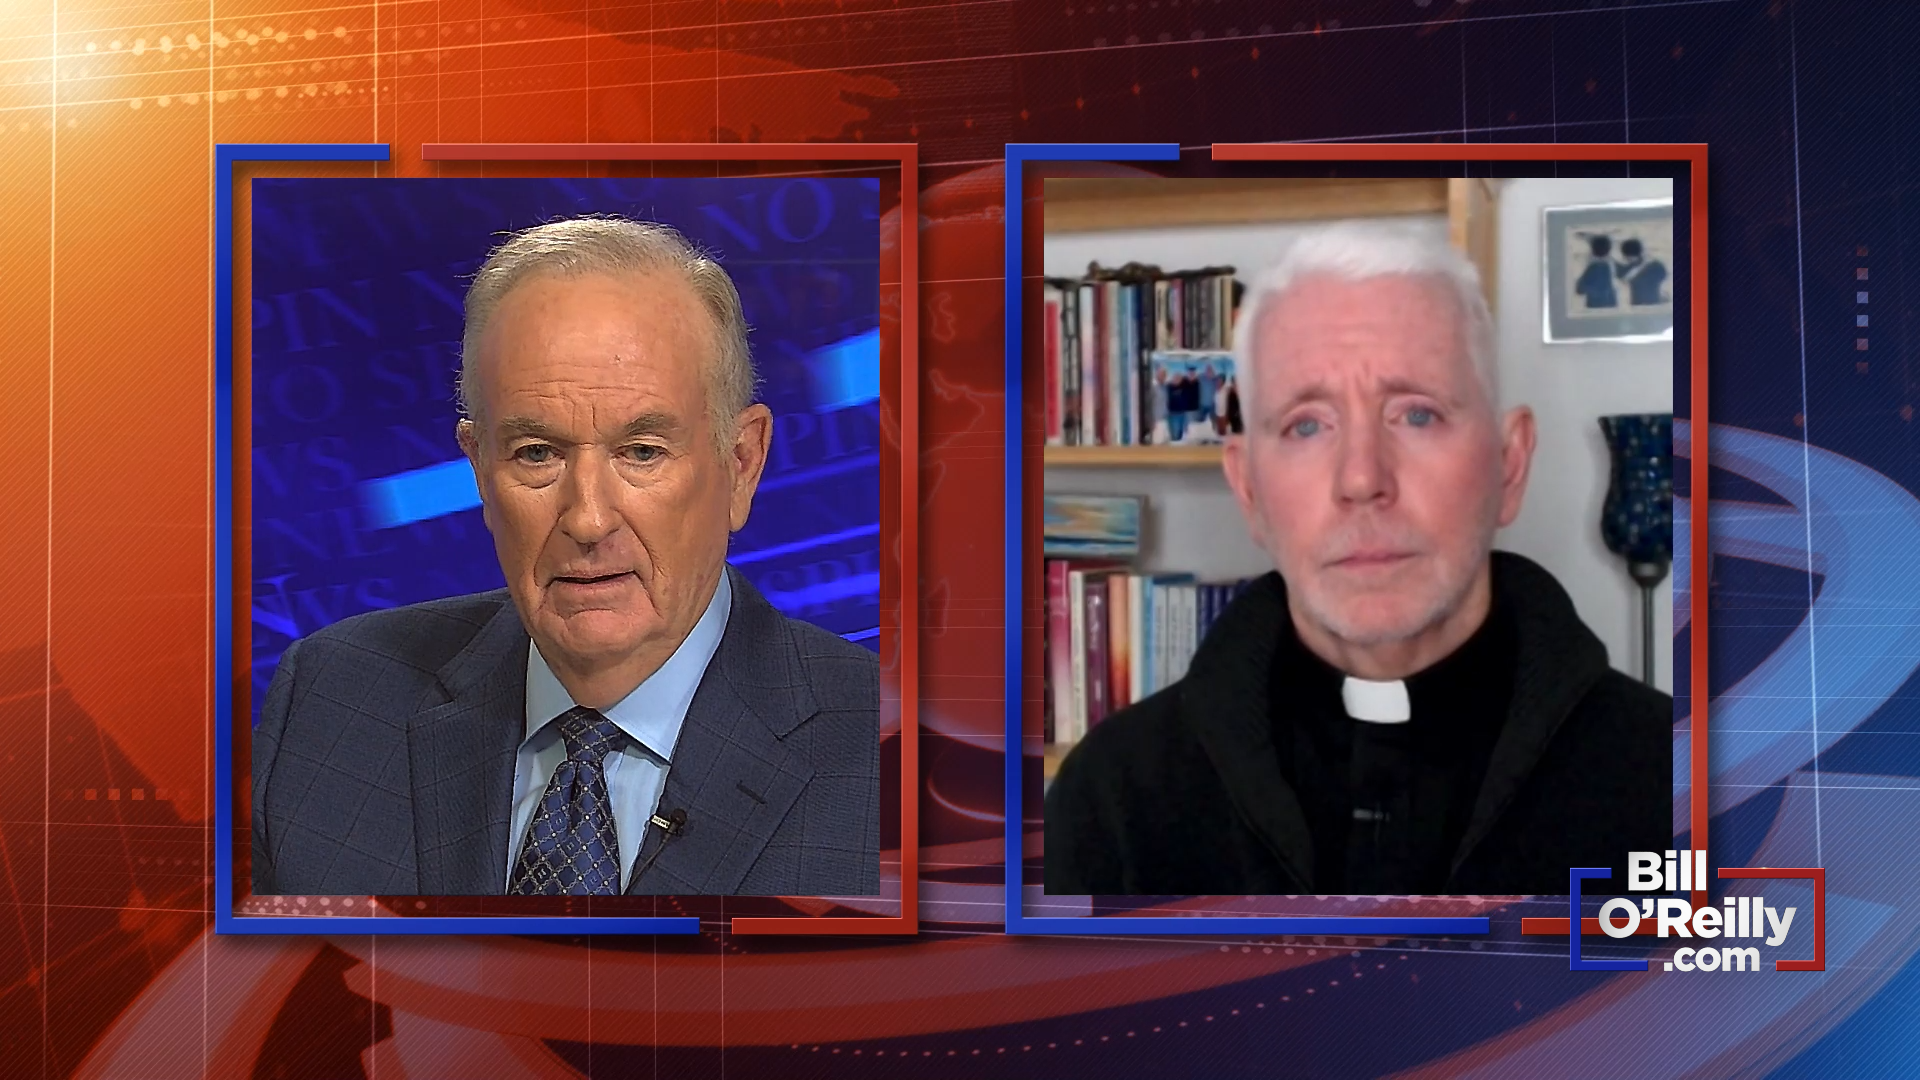 O'Reilly Debates CNN Priest On Abortion: 'Joe Biden Is Promoting Death!'